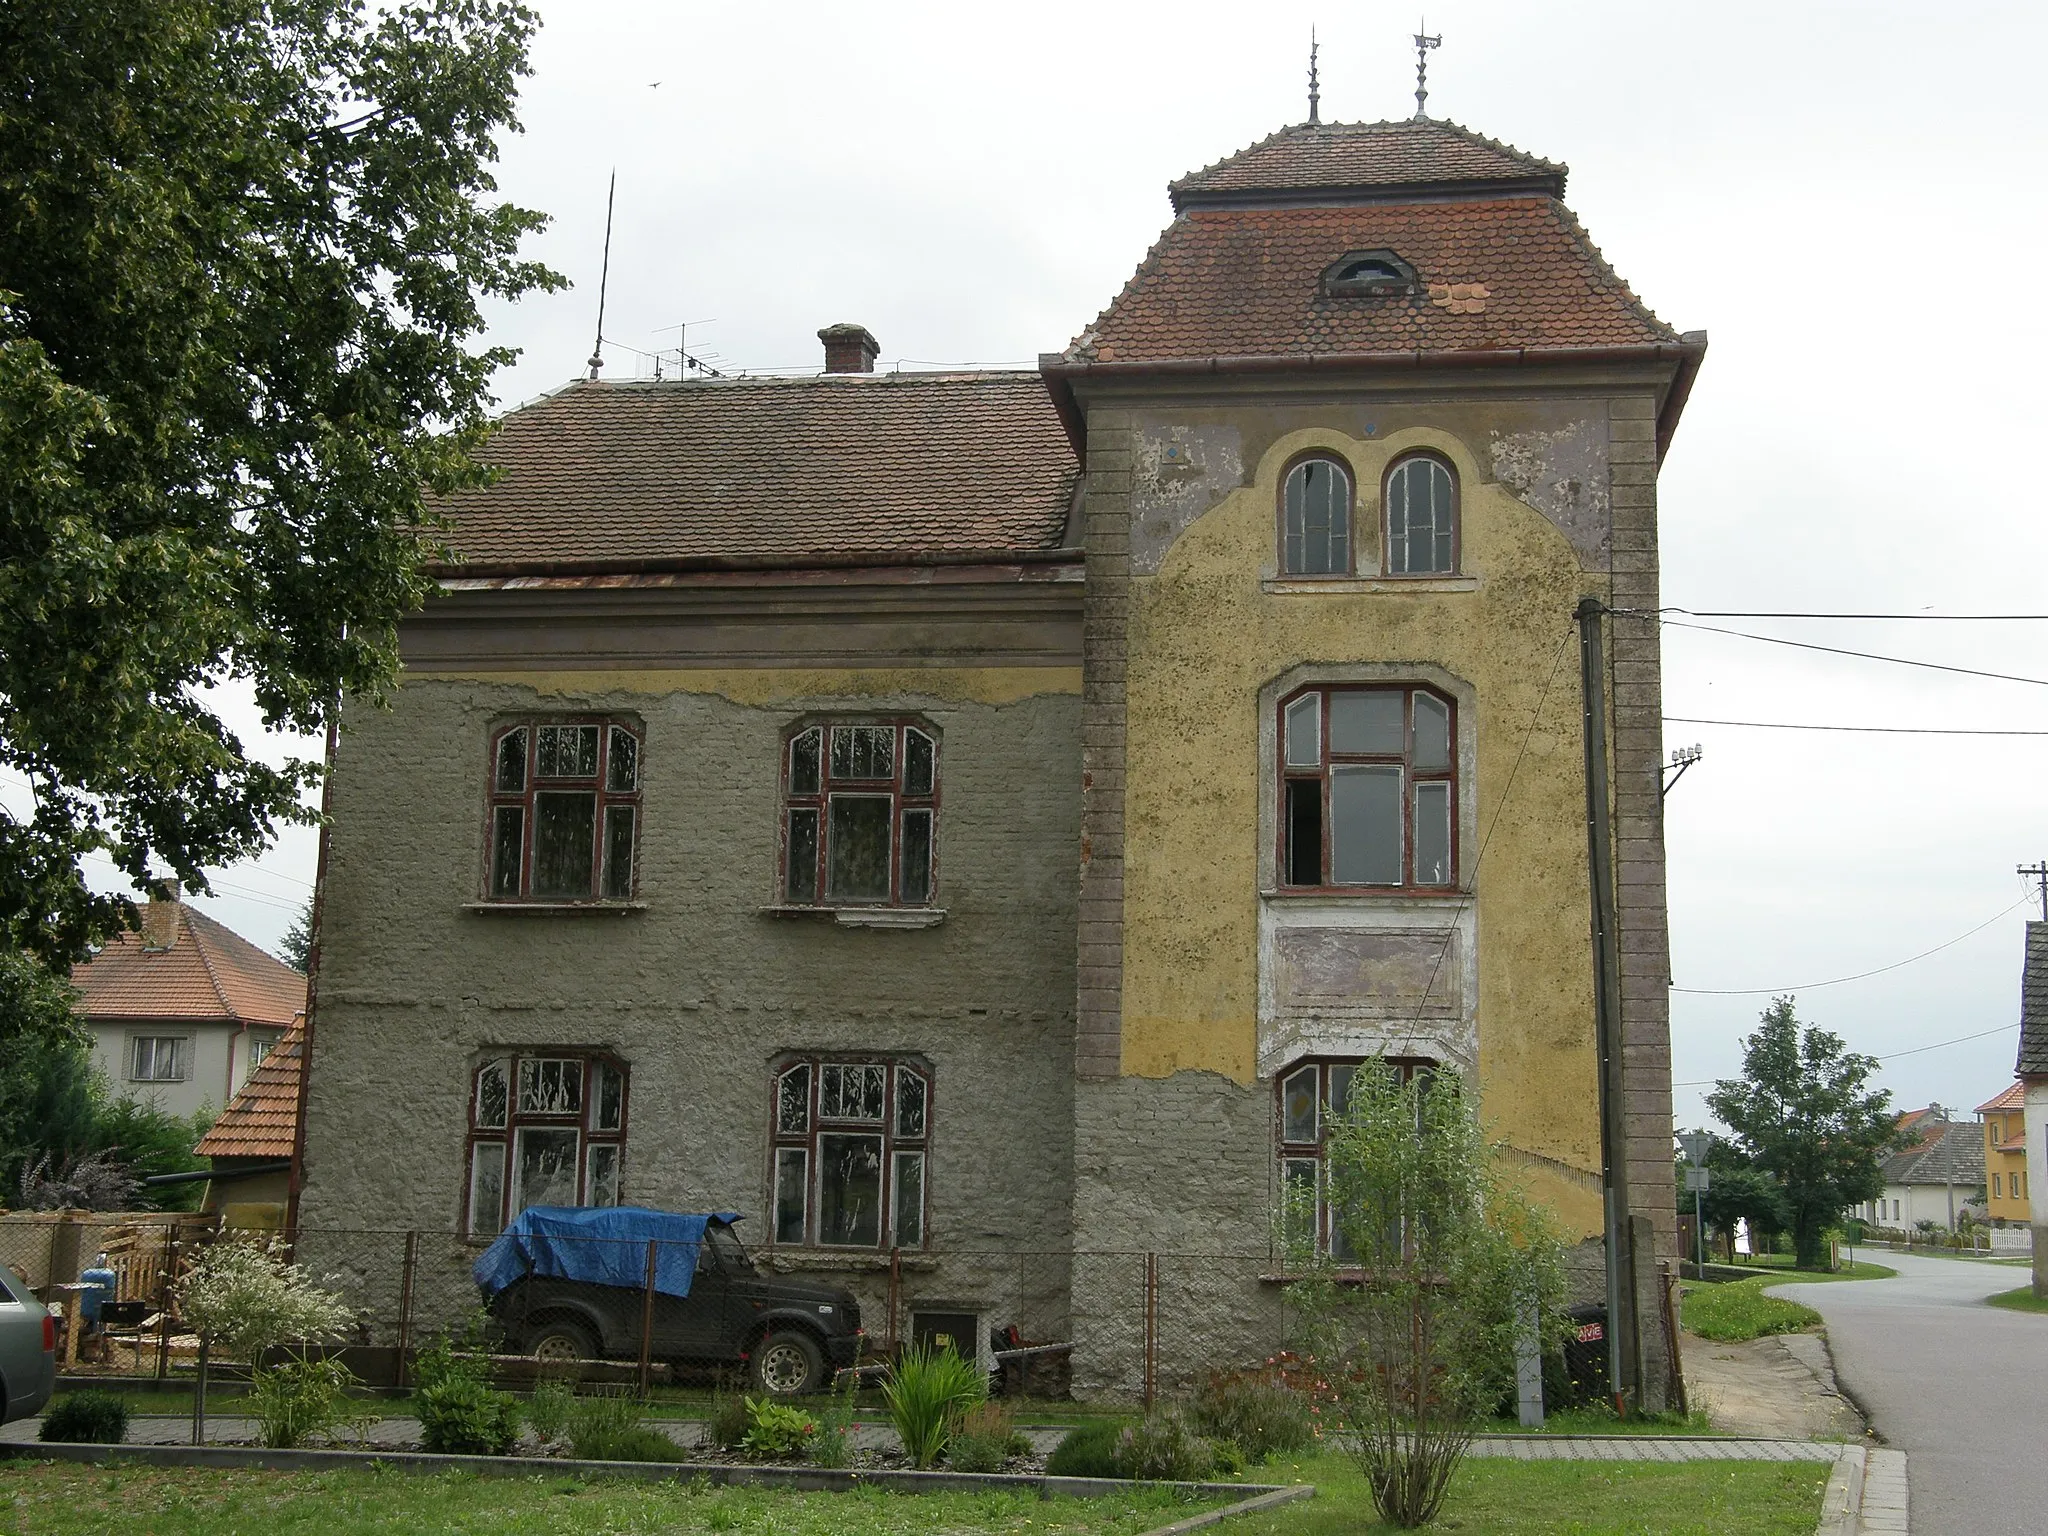 Photo showing: Domamil in Třebíč District, Czech Republic.